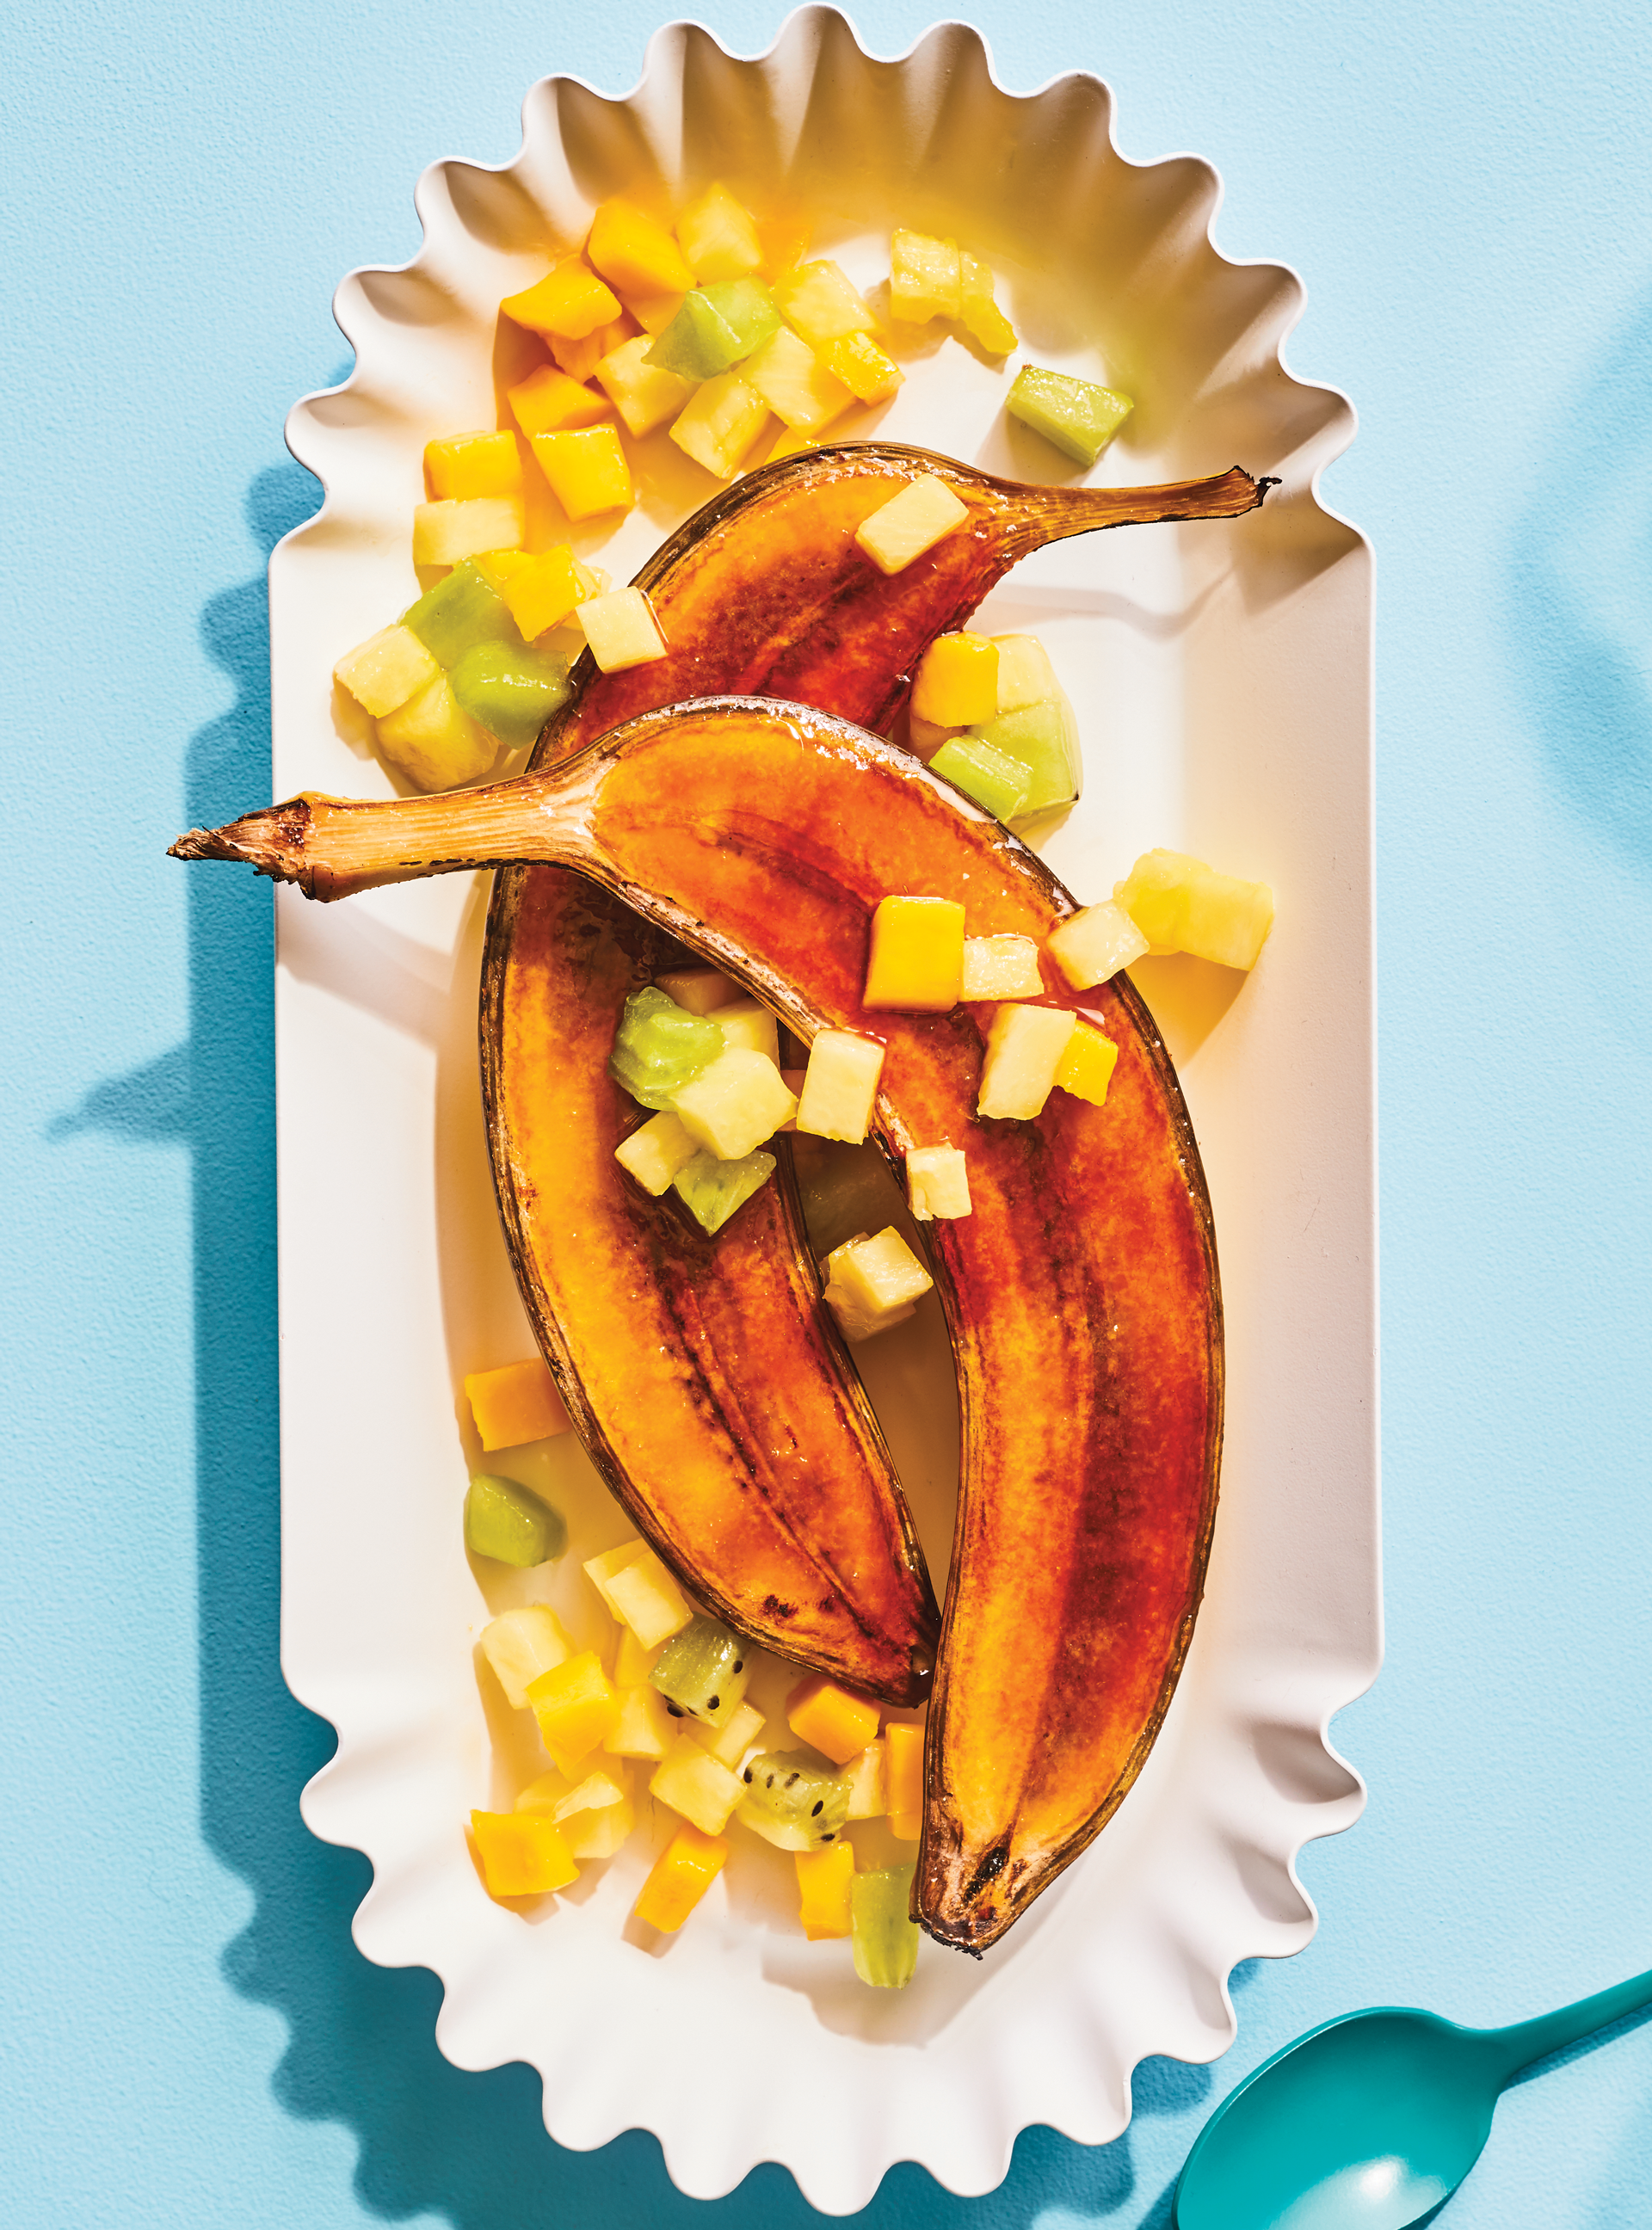 Caramelized Bananas with Fruit Salad